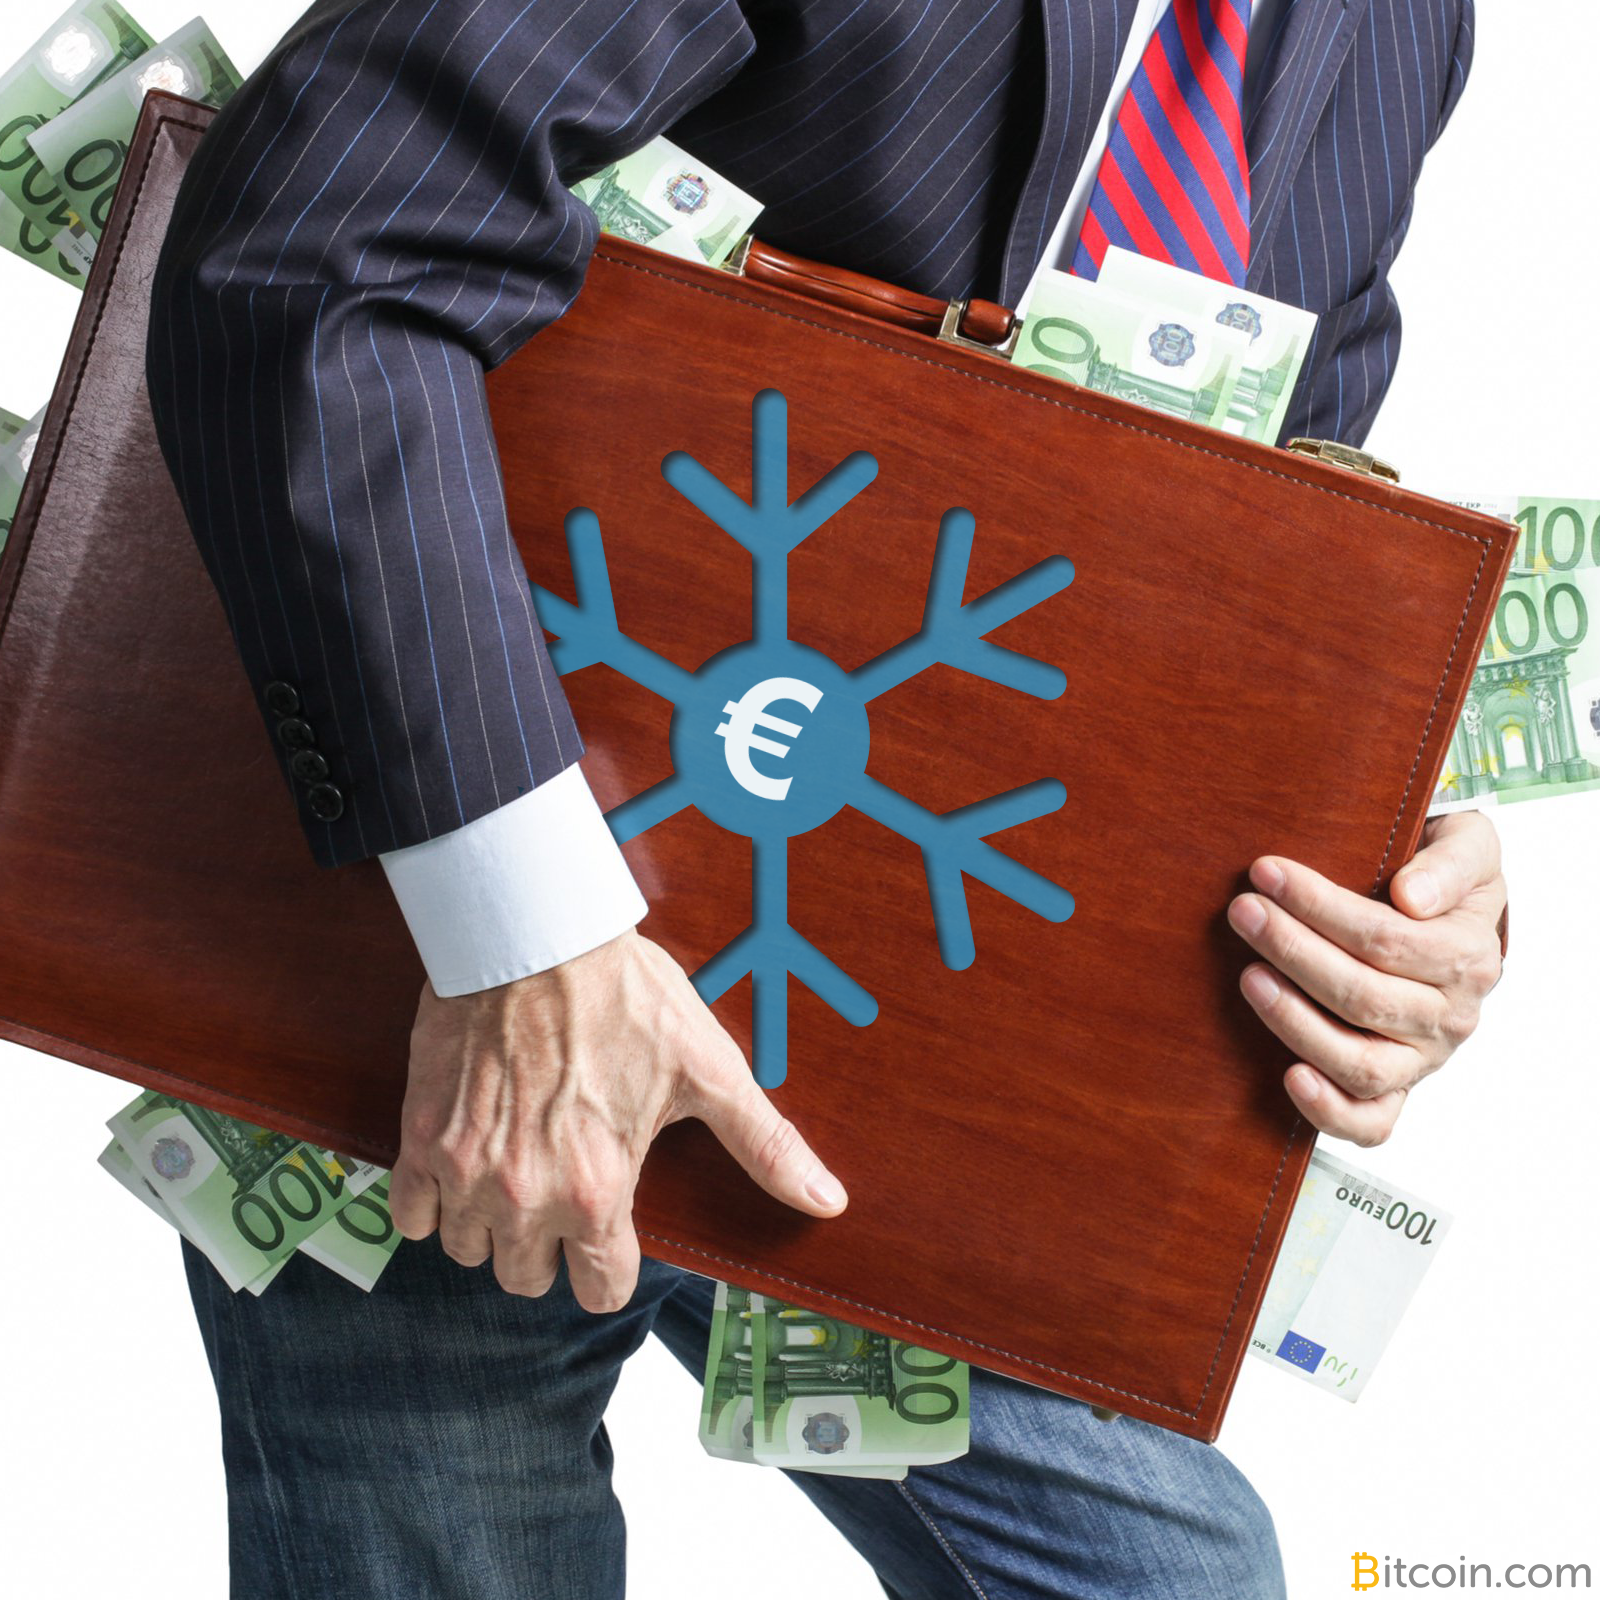 European Union Proposes Account Freezes to Protect Failing Banks